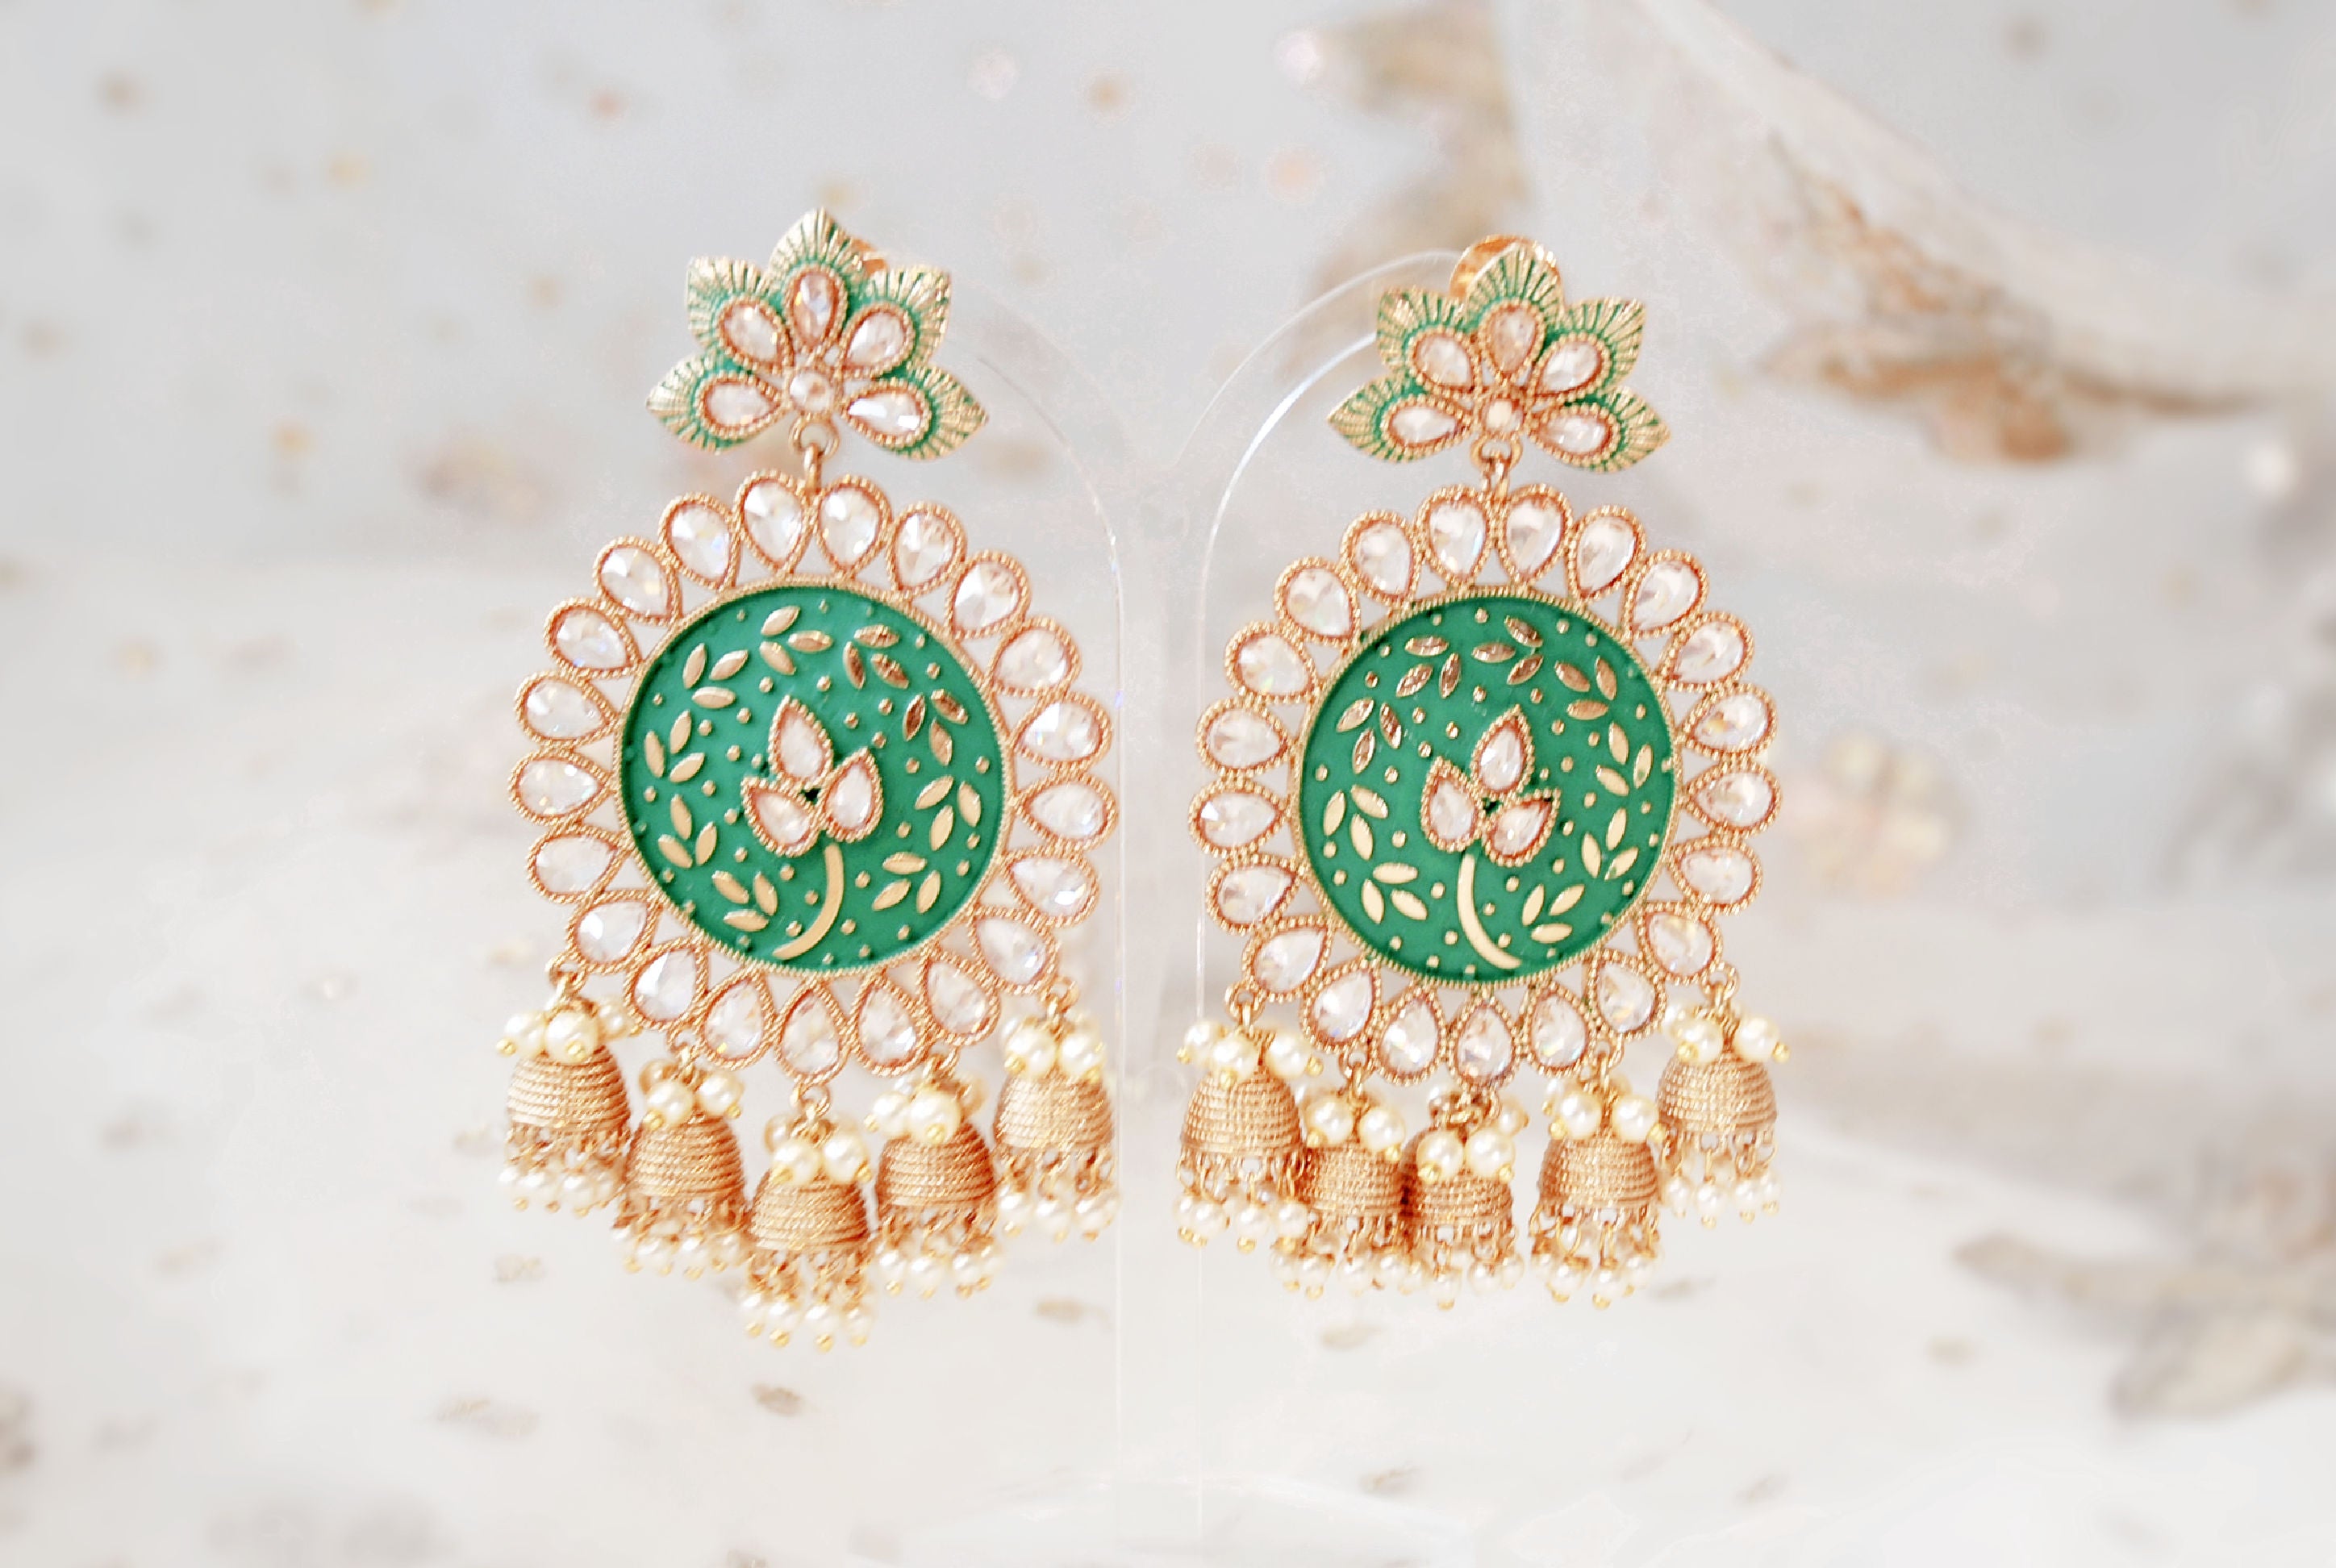 How to style earrings with kurti || Kurti earrings ideas || jewellery for  kurtis - YouTube